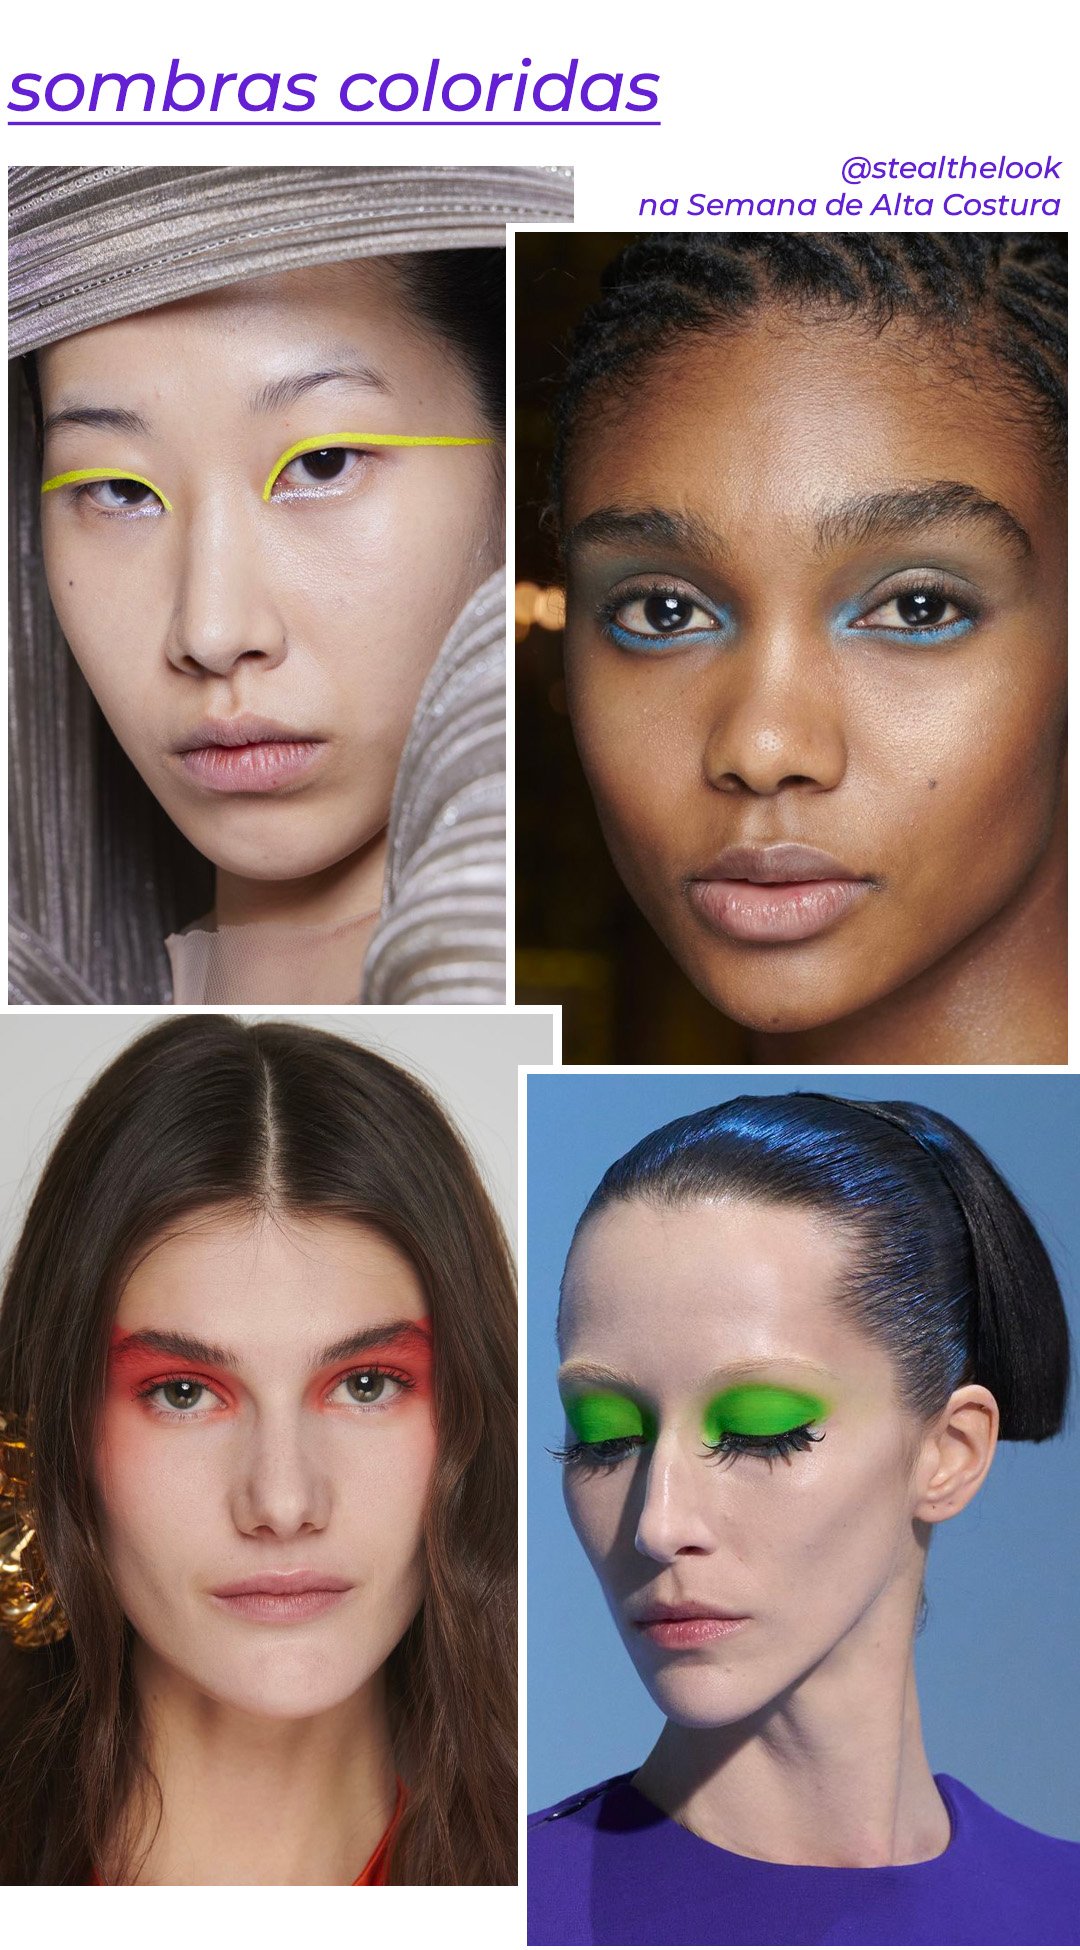 Gaurav Gupta, Rahul Mishra, Alexis Mabille, Jean Paul Gaultier  - maquiagem-sombra-colorida - tendências de beleza - verão - brasil - https://stealthelook.com.br